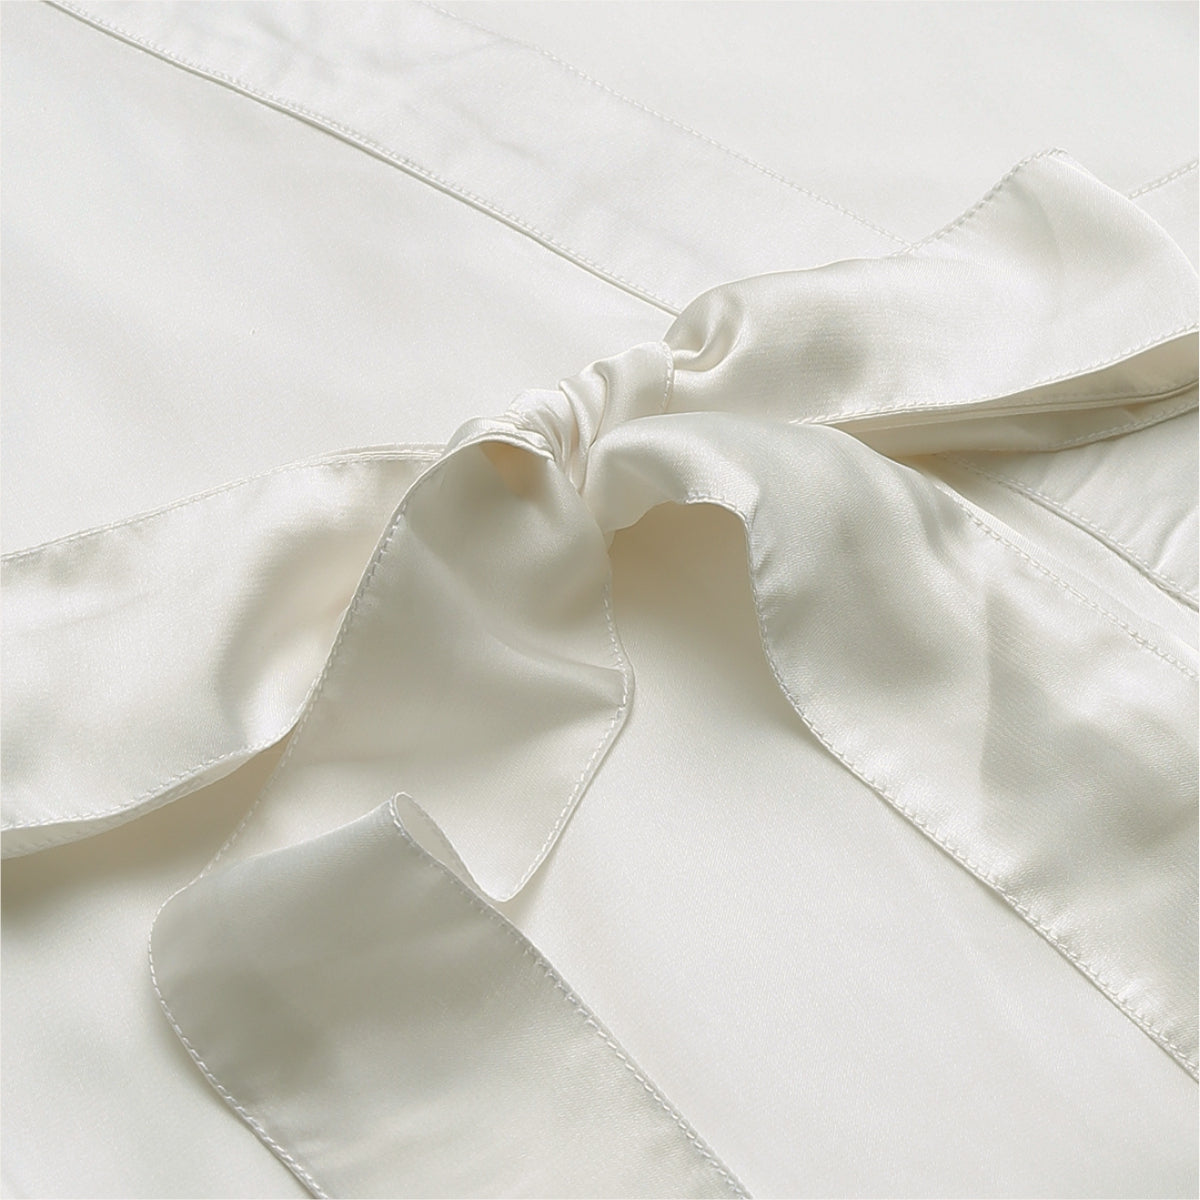 Bride Embroidered White Silk Robe